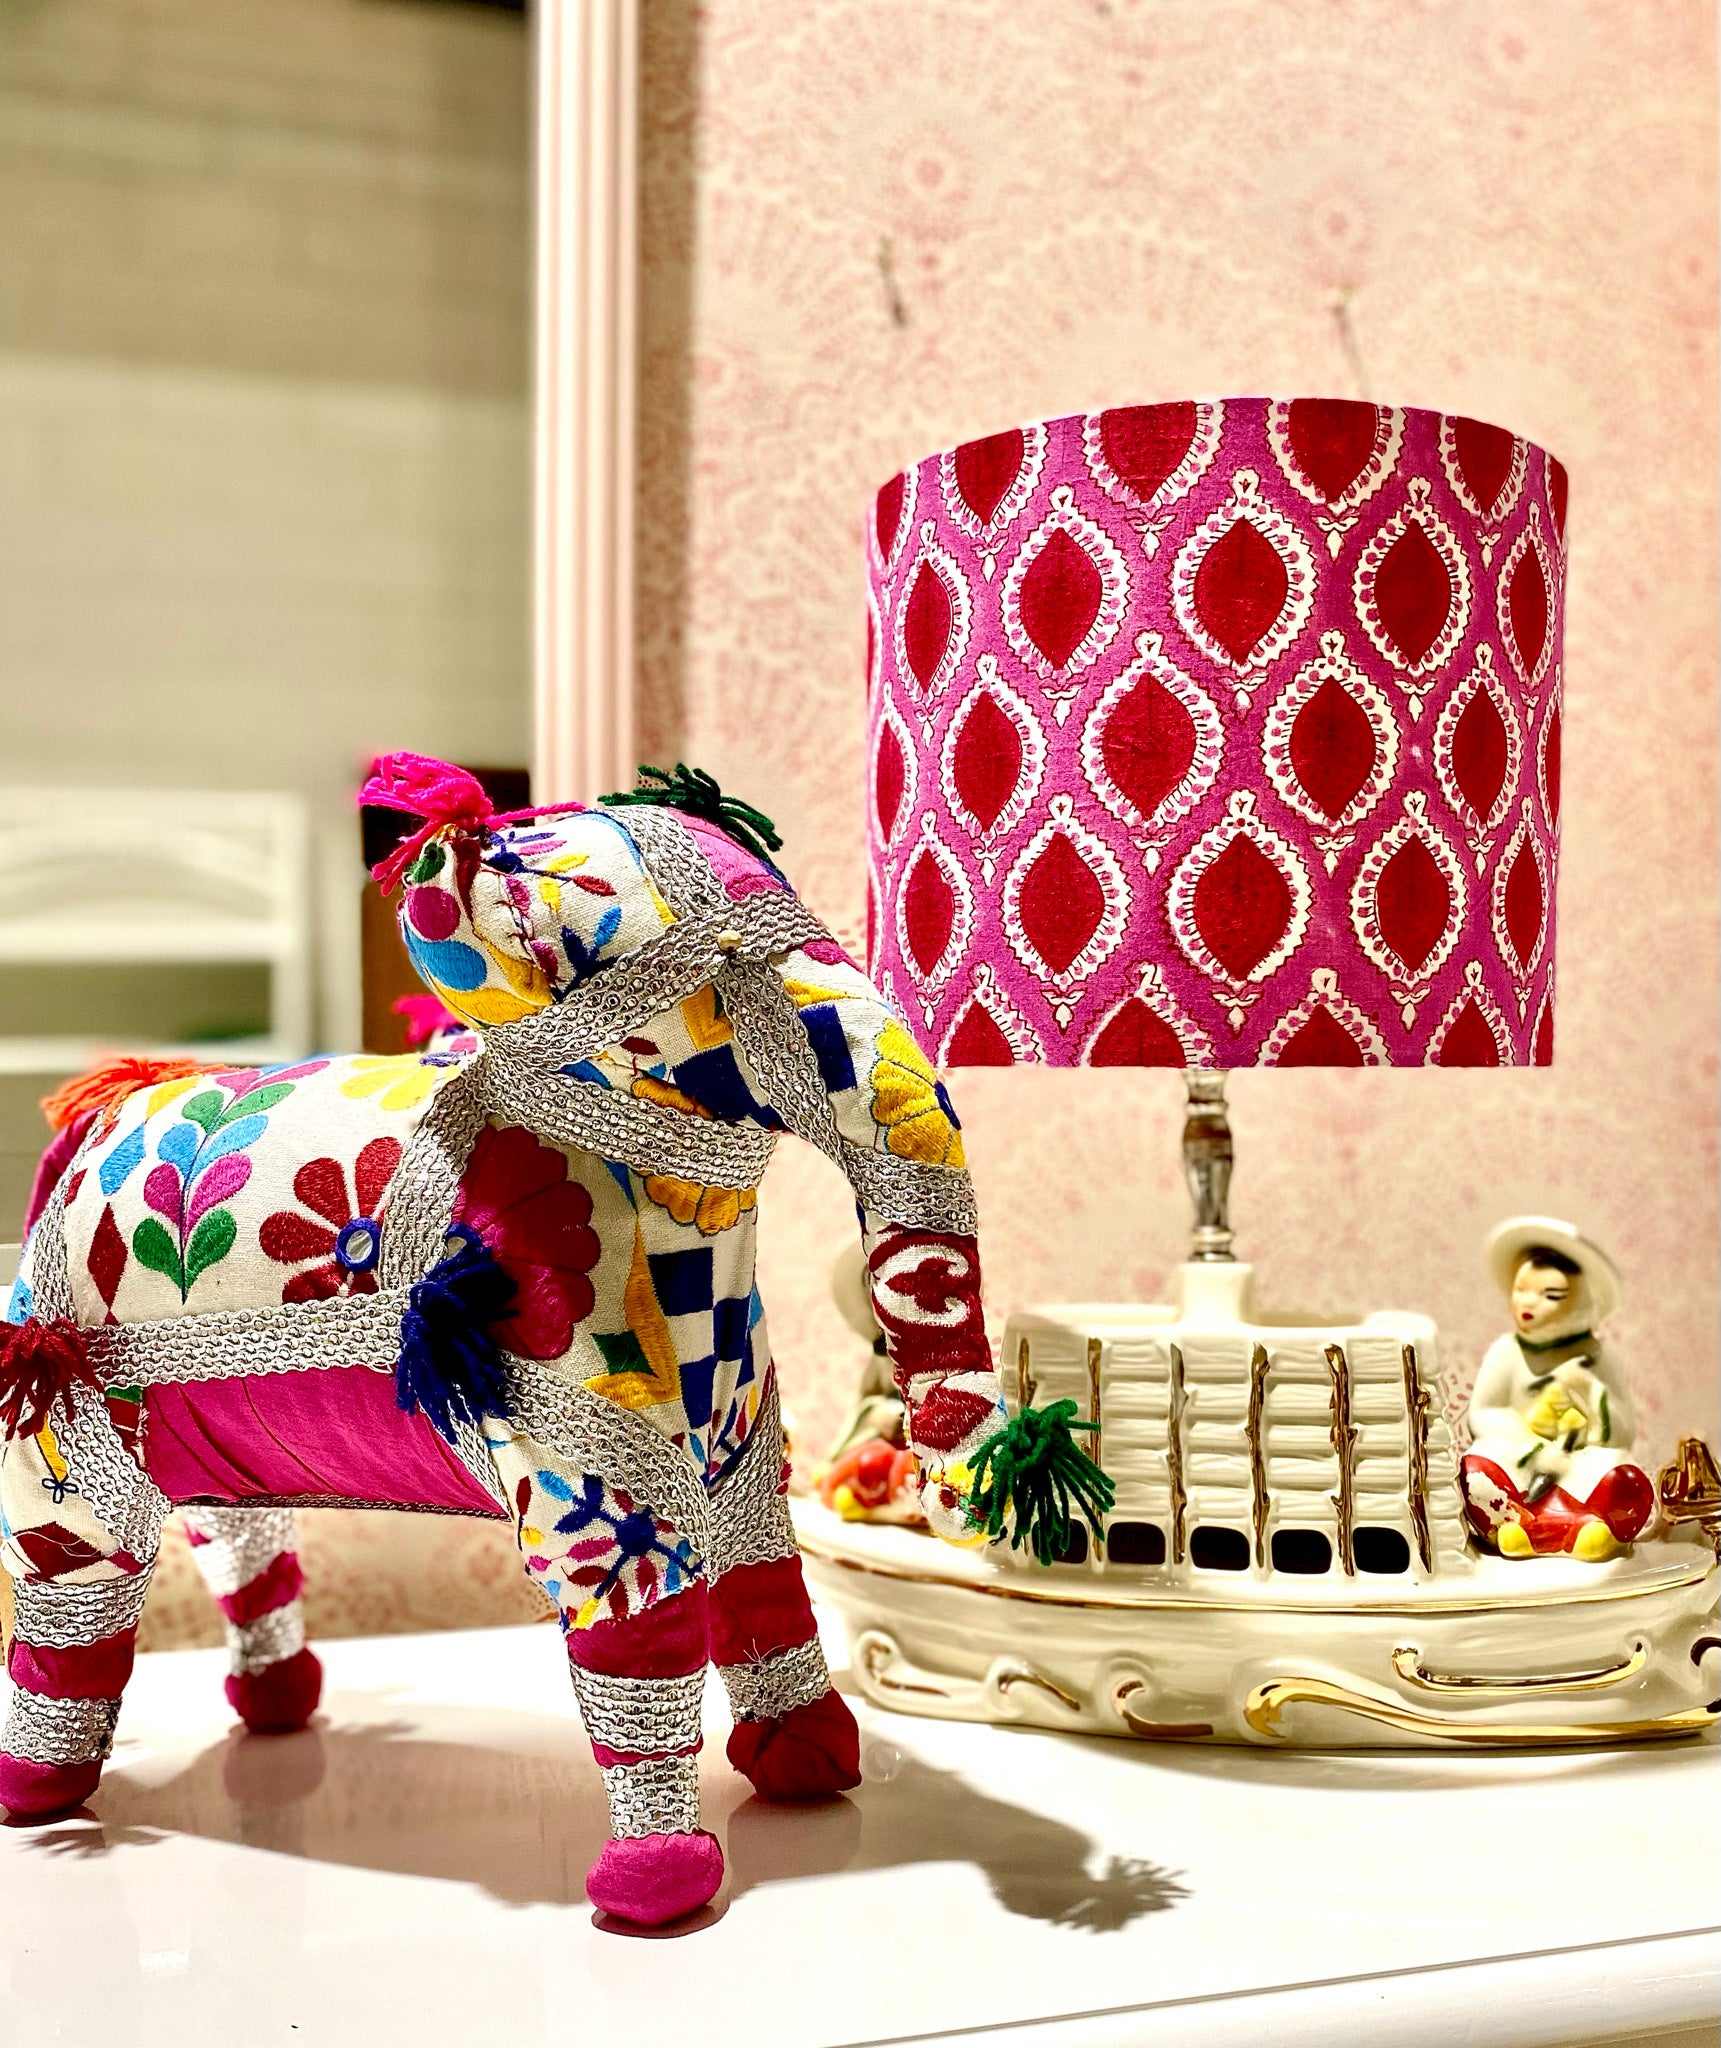 play elephant stuffed animal beside a lamp